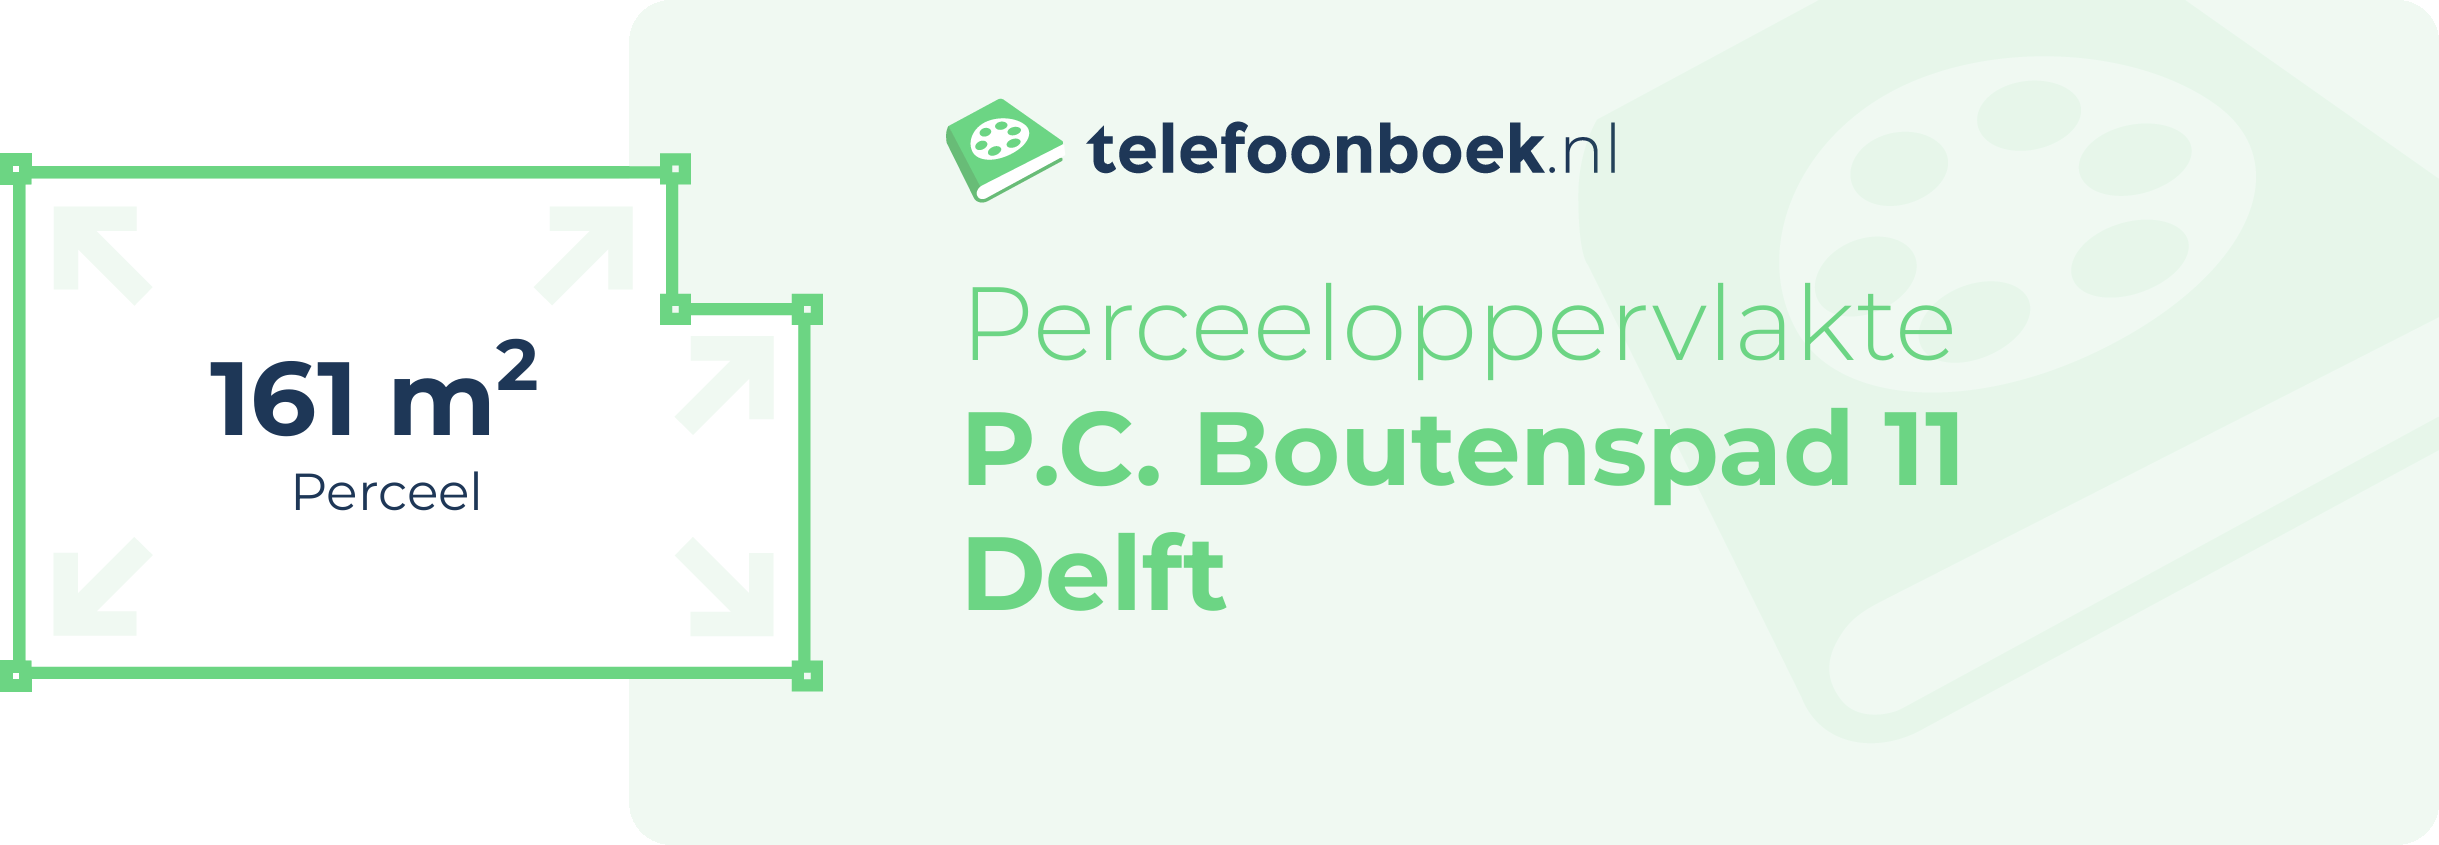 Perceeloppervlakte P.C. Boutenspad 11 Delft